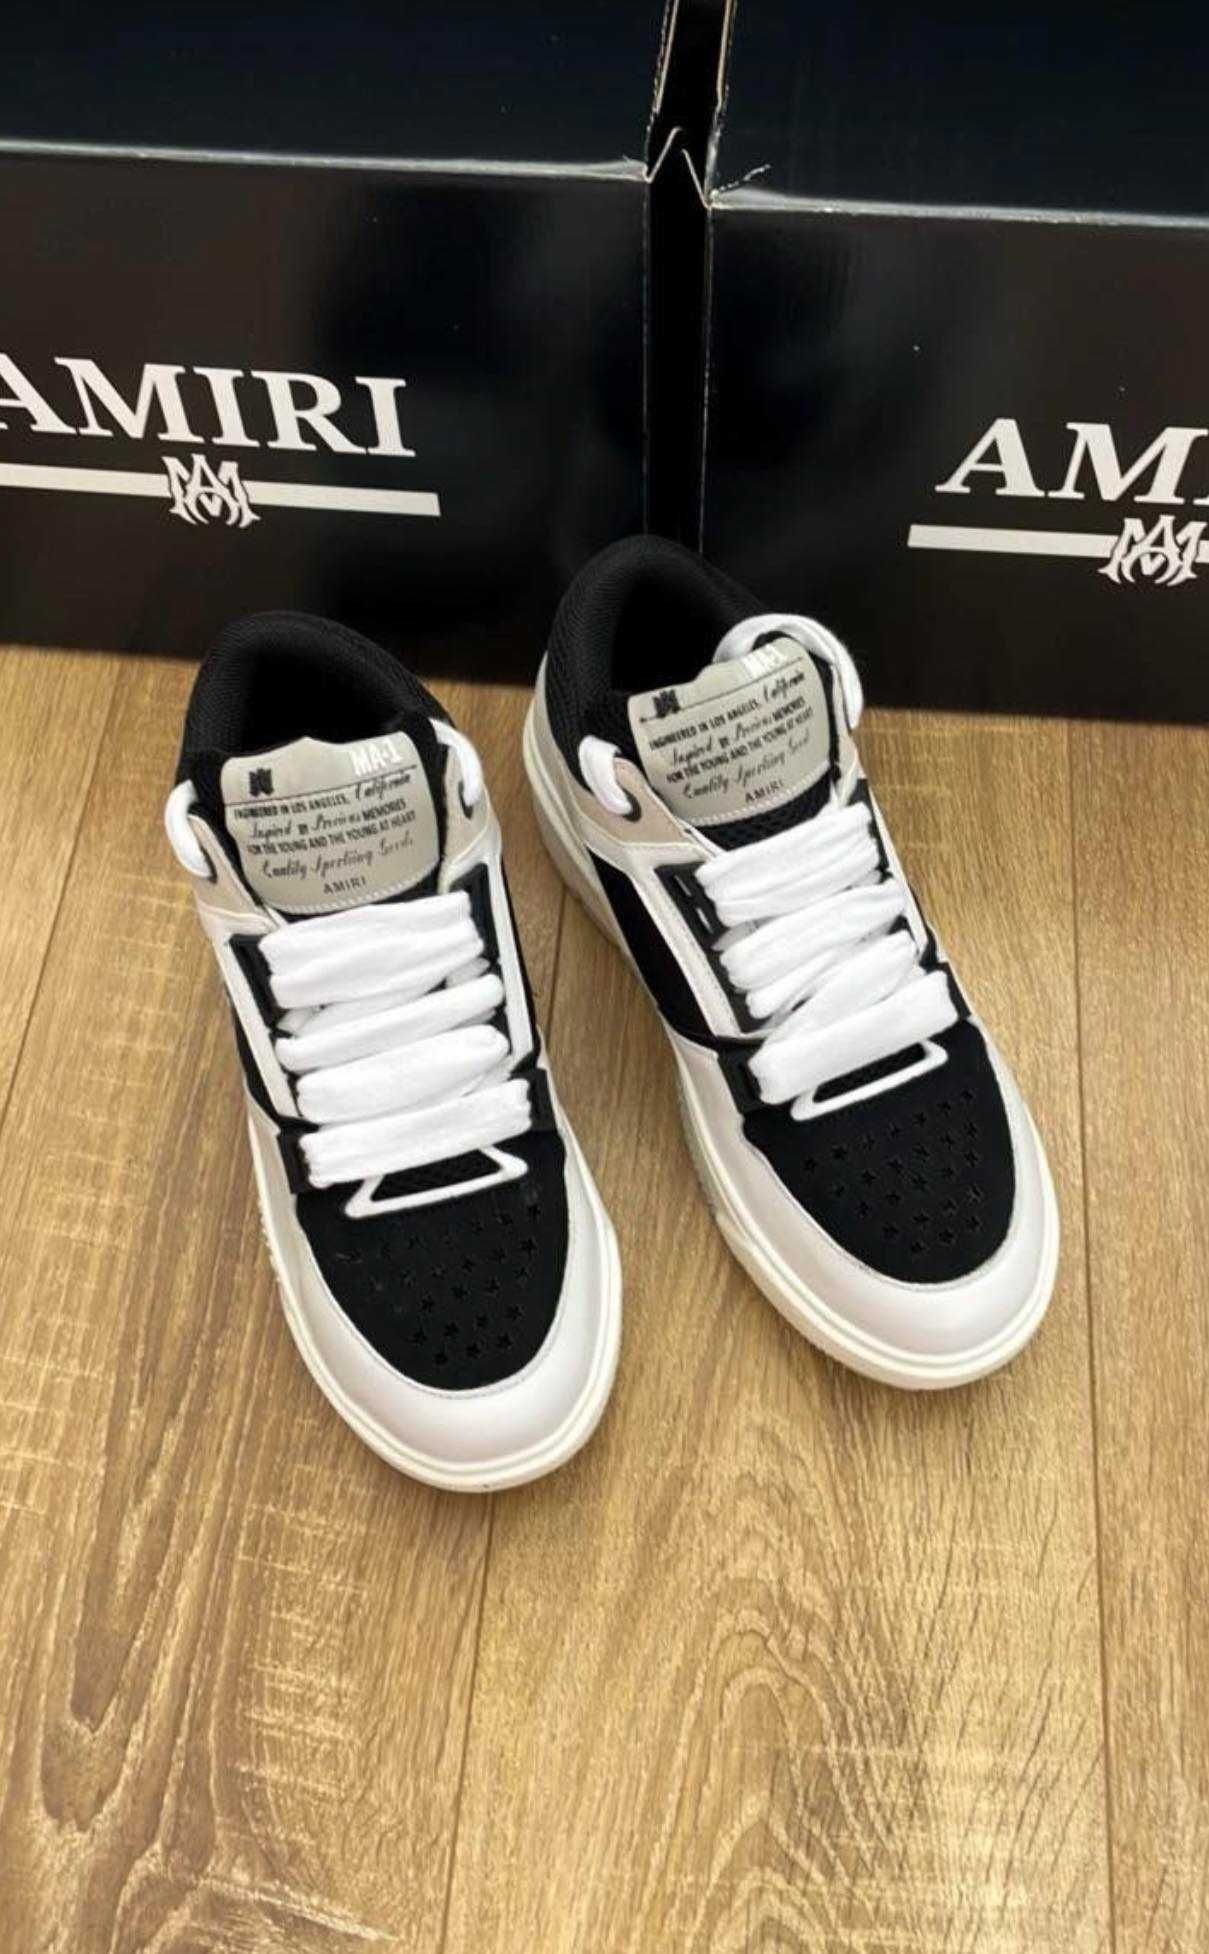 Adidasi AMIRI Model Nou Limited Edition for Men